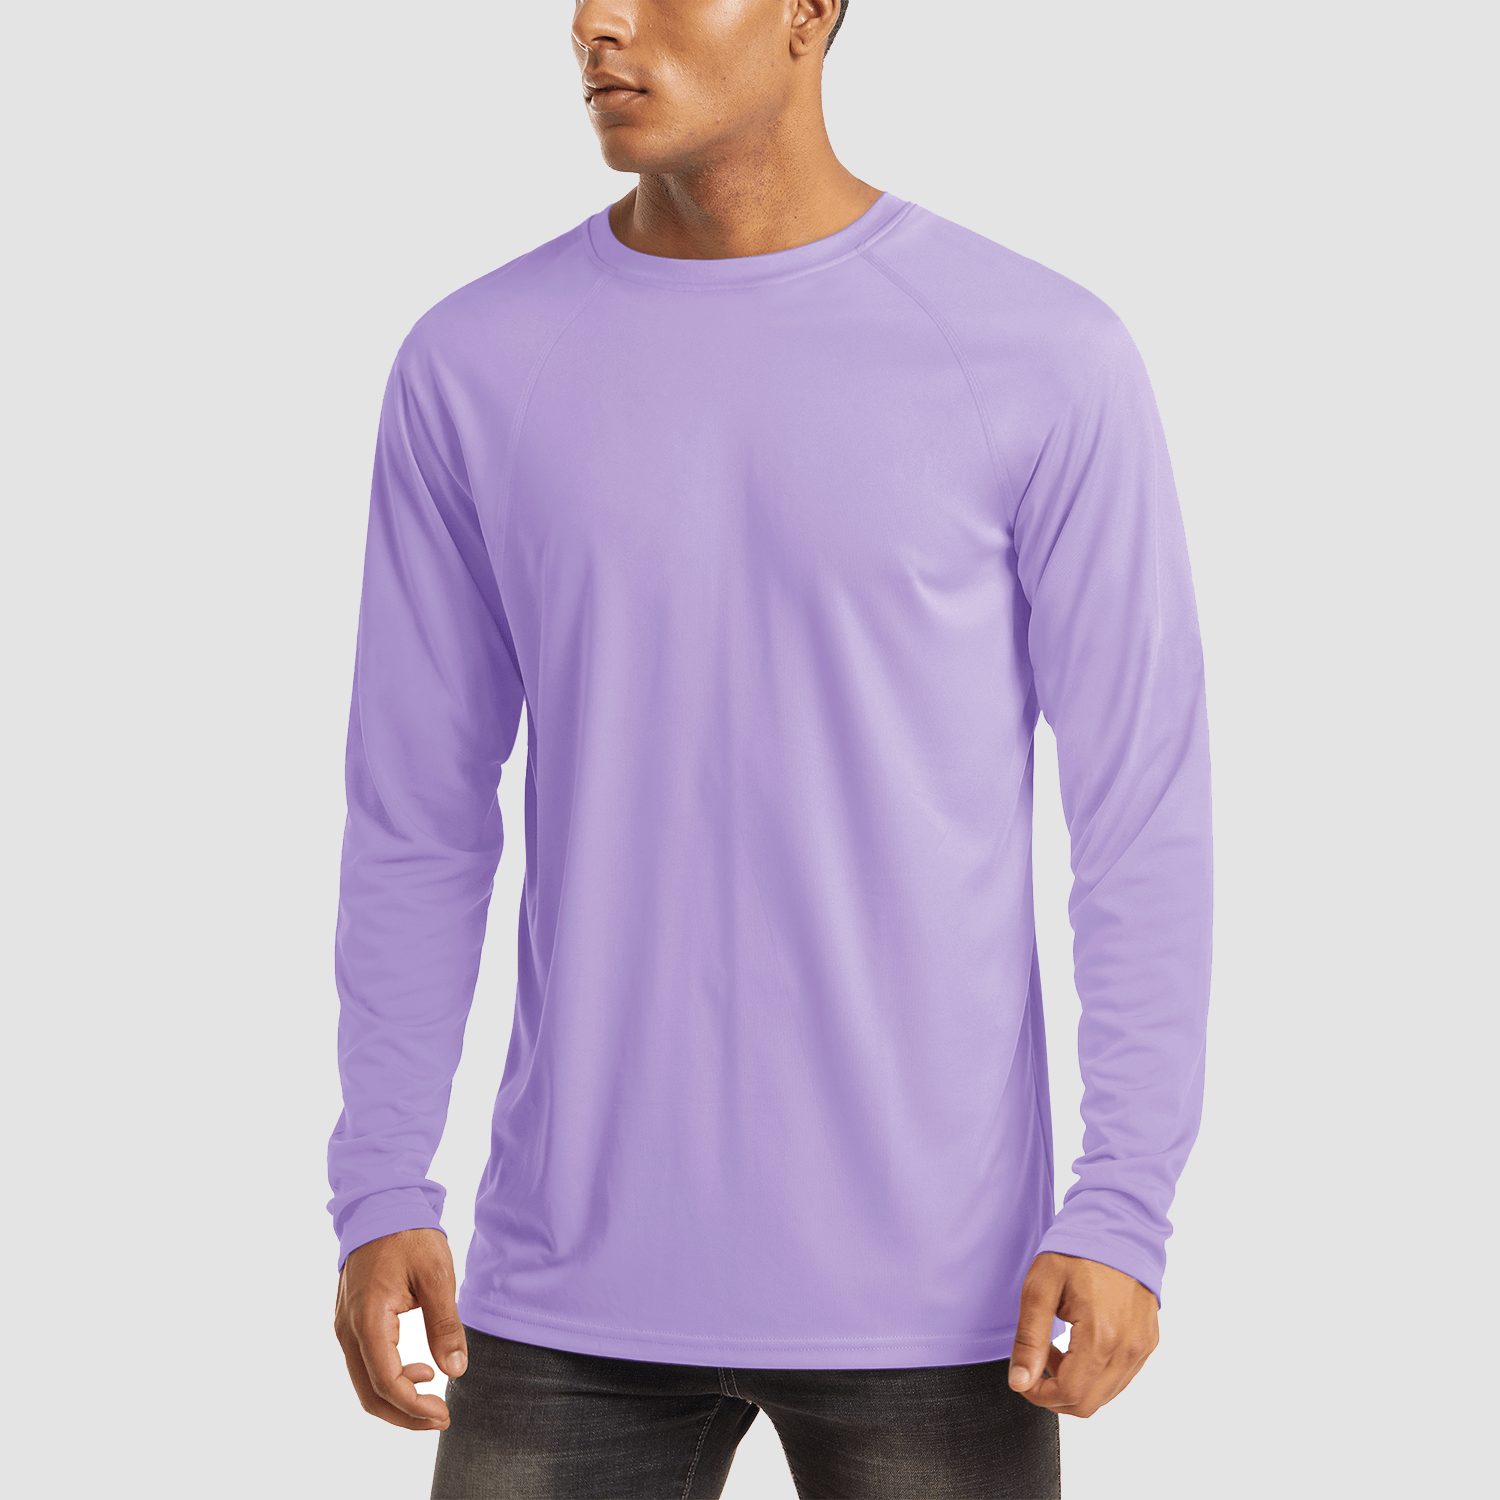 【Buy 4 Get 4th Free】Men's Long Sleeve Hooded Shirt UPF 50+ Athletic Shirt, Light Purple / S